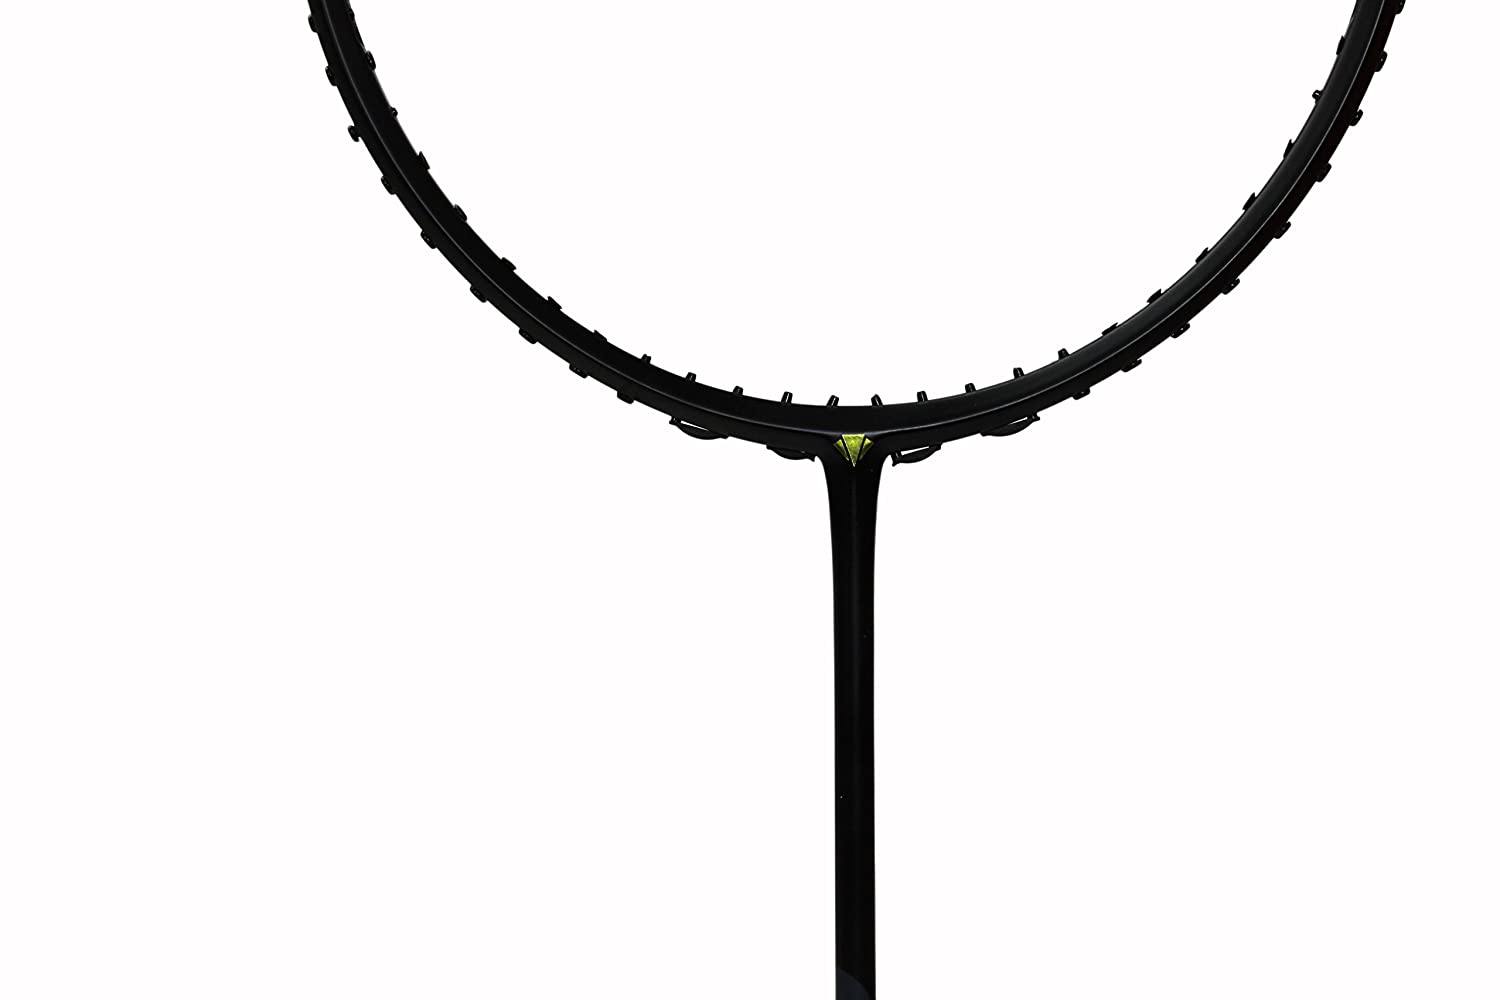 Carlton Zero 002I Badminton Racket - Mat Black - Best Price online Prokicksports.com